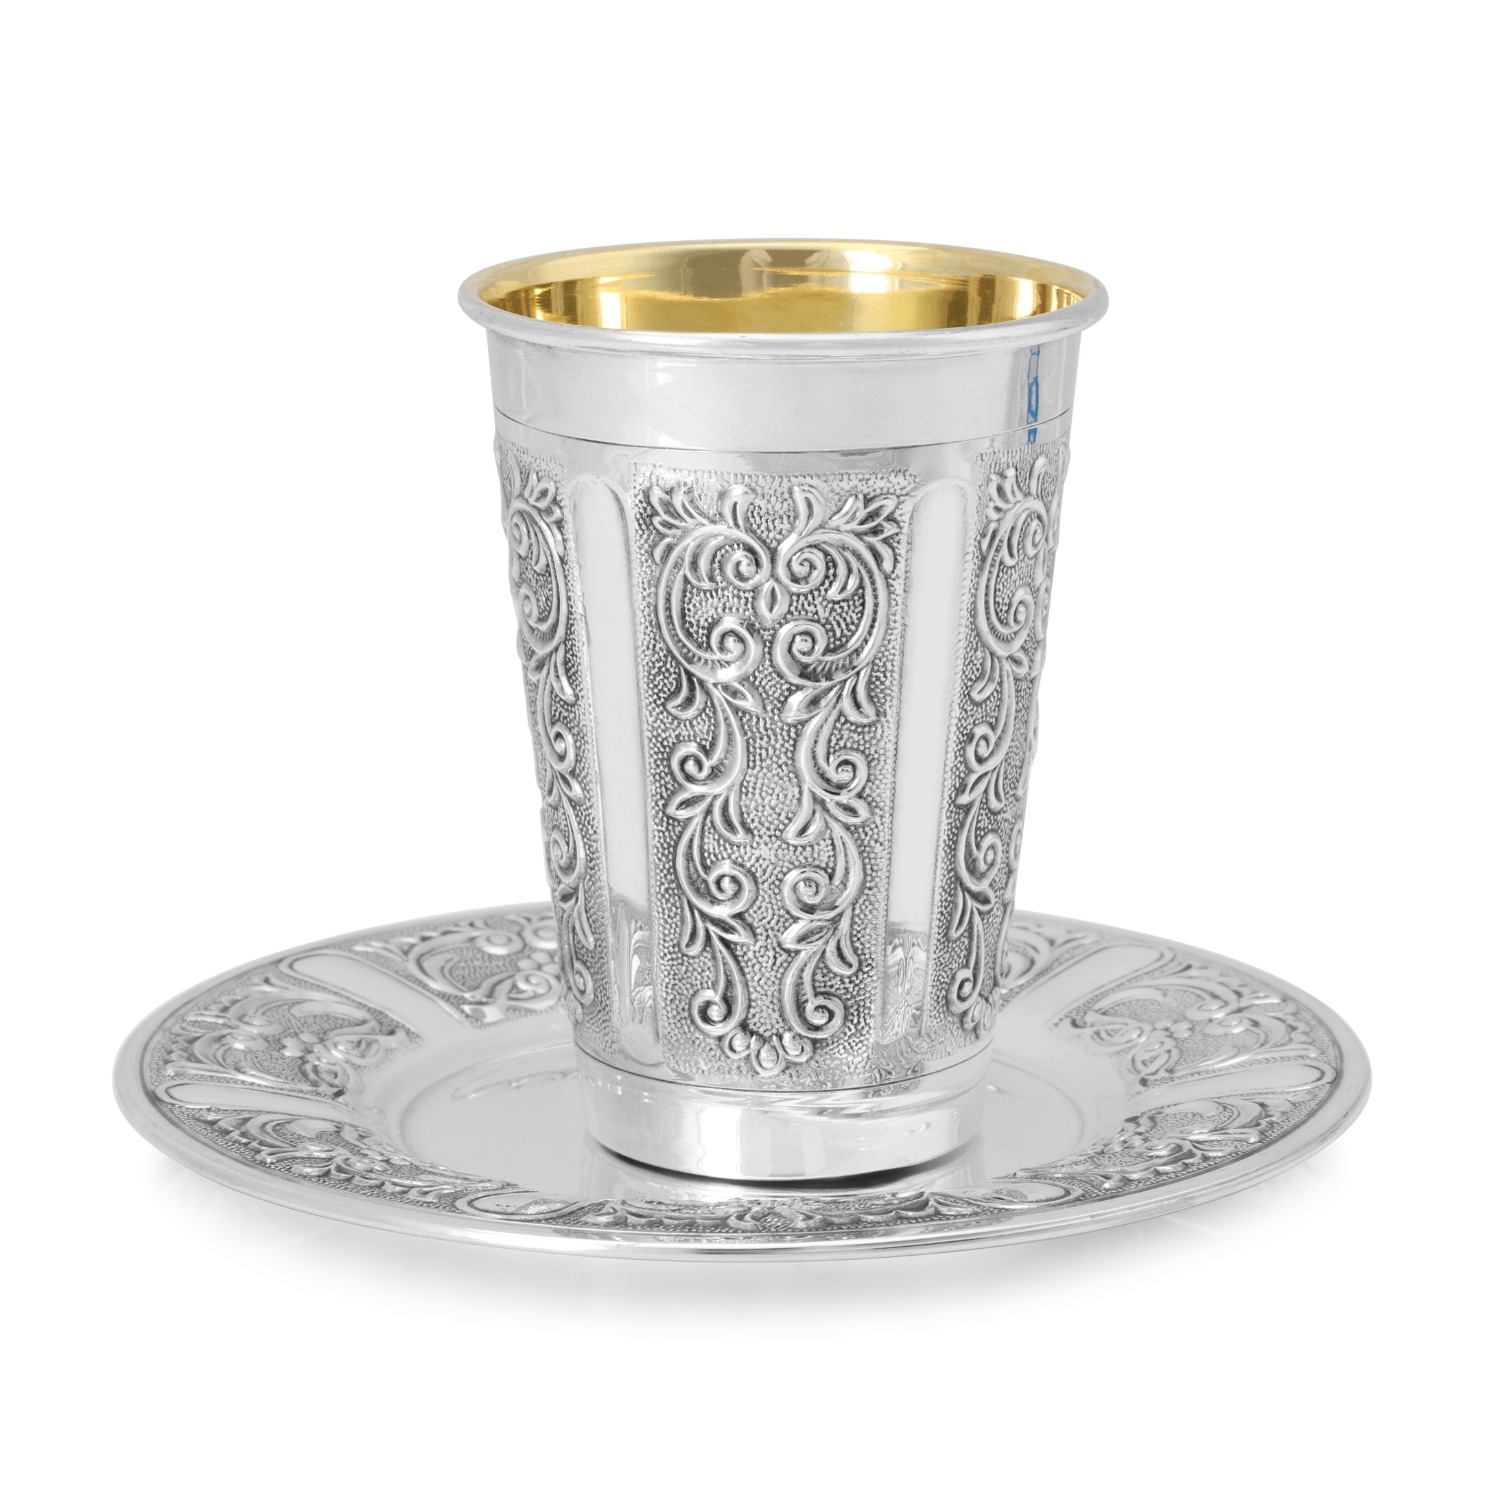 Hadad Bros Sterling Silver "Lugano" Kiddush Cup with Ornate Damask Design - 1